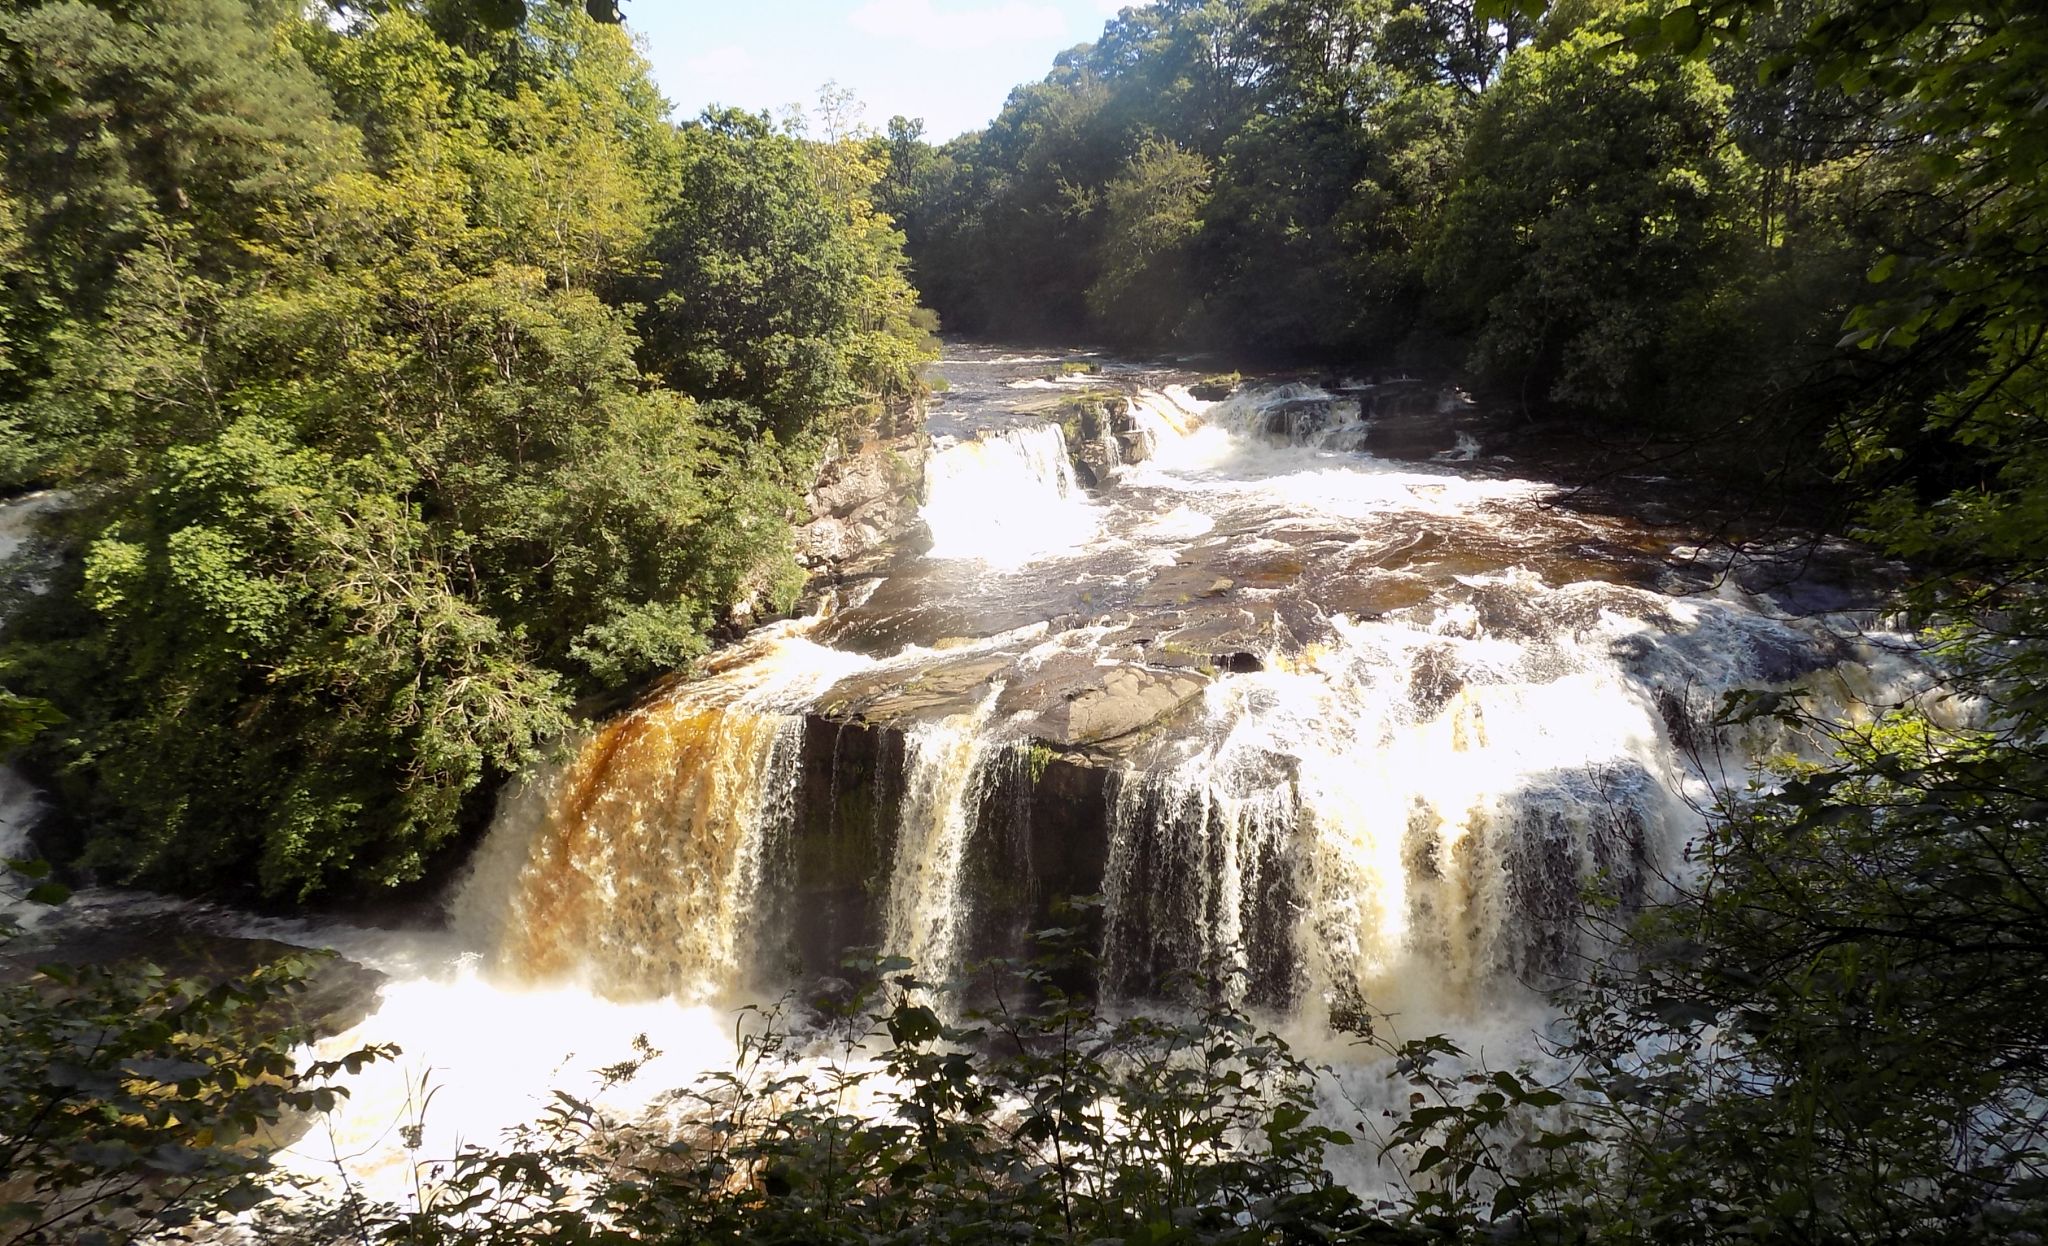 The Falls of Clyde - Bonnington Linn